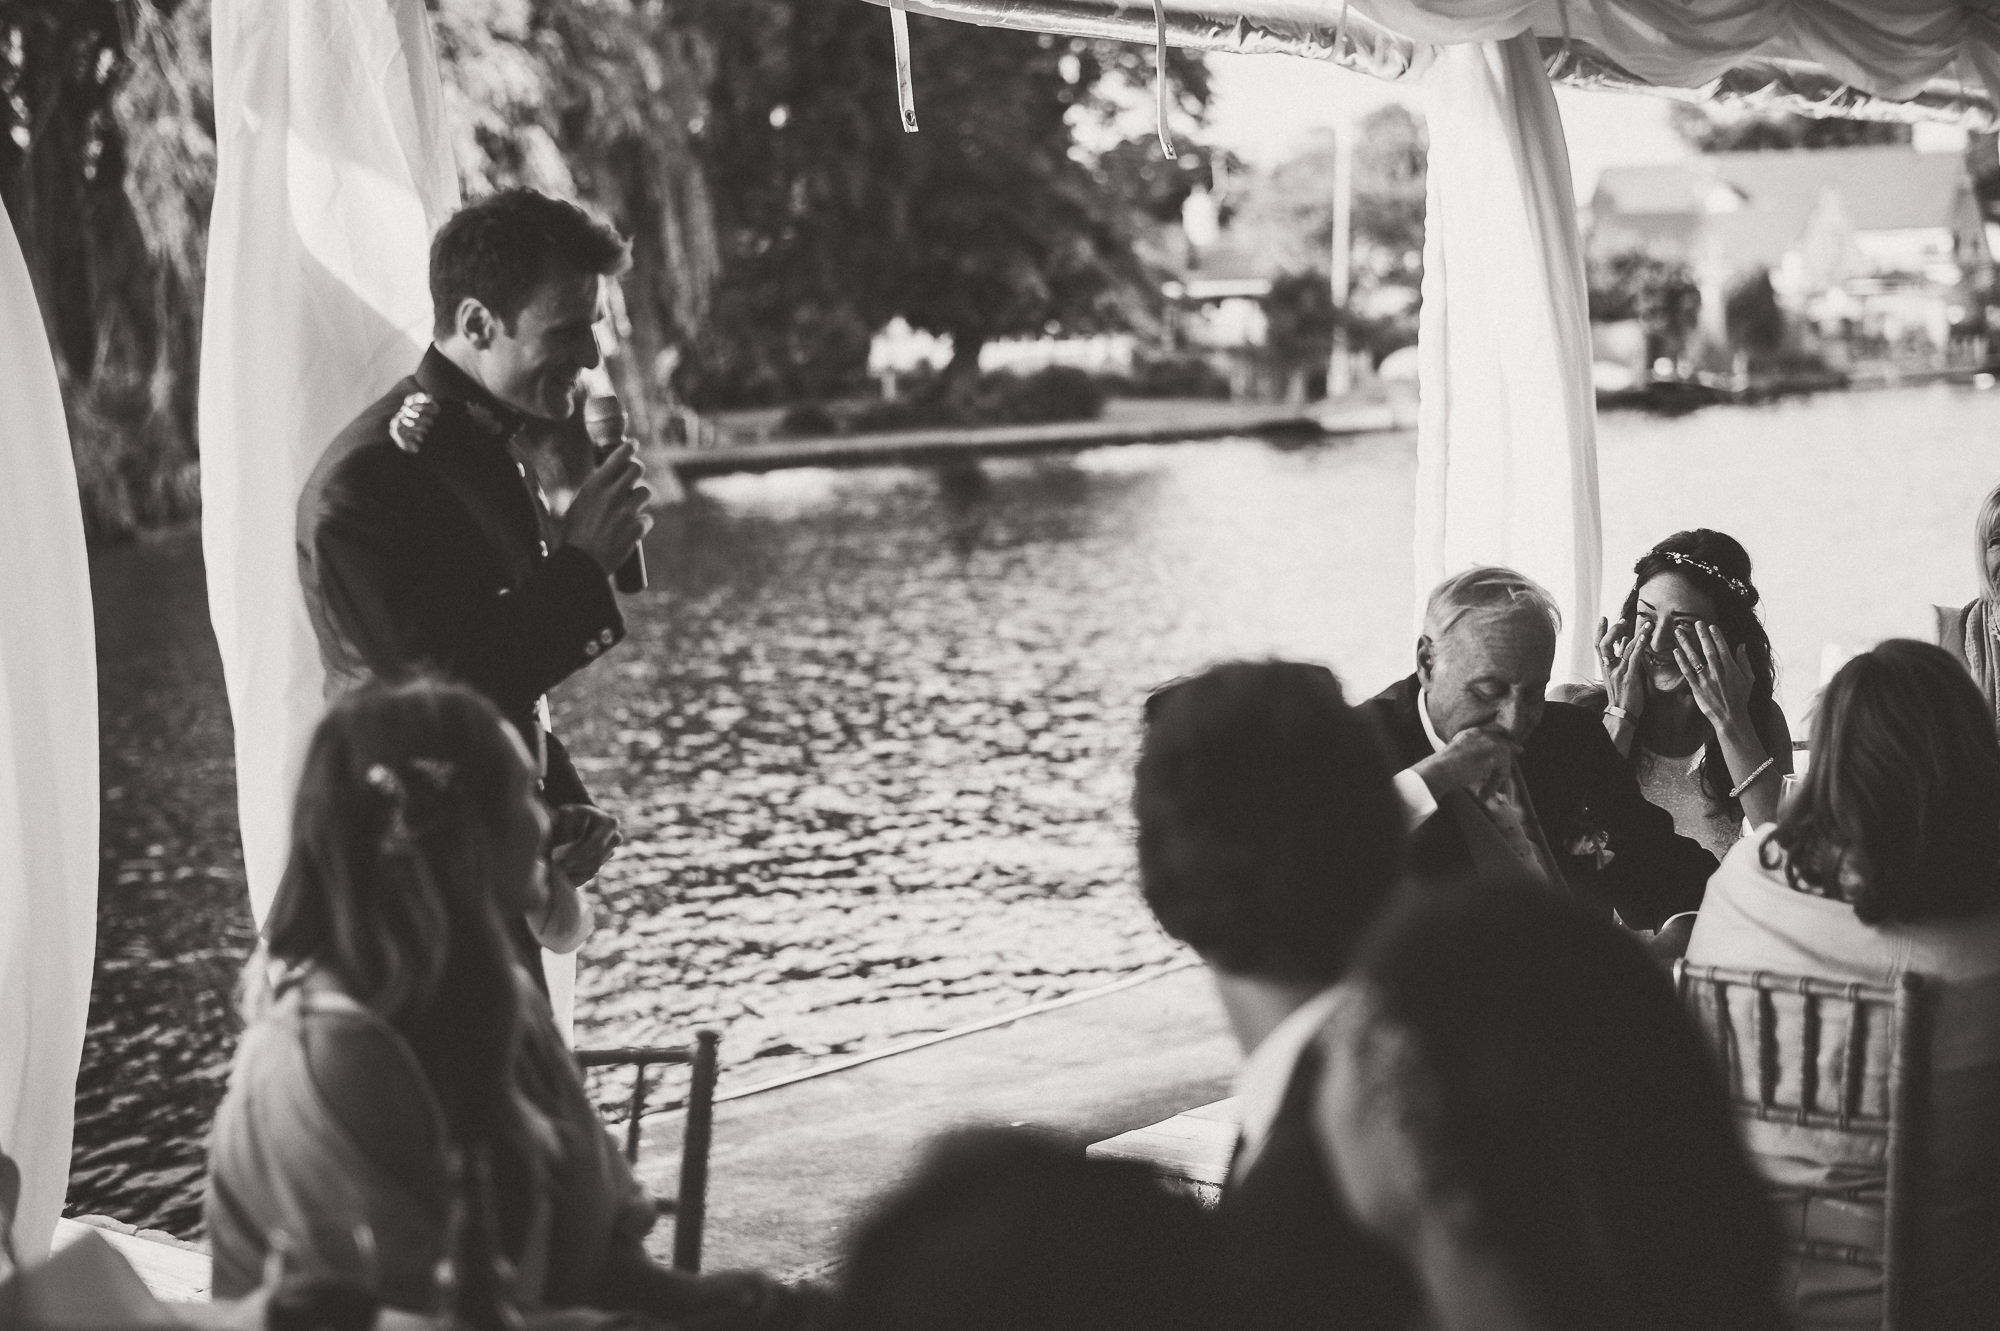 A black and white wedding photo capturing a man giving a speech.